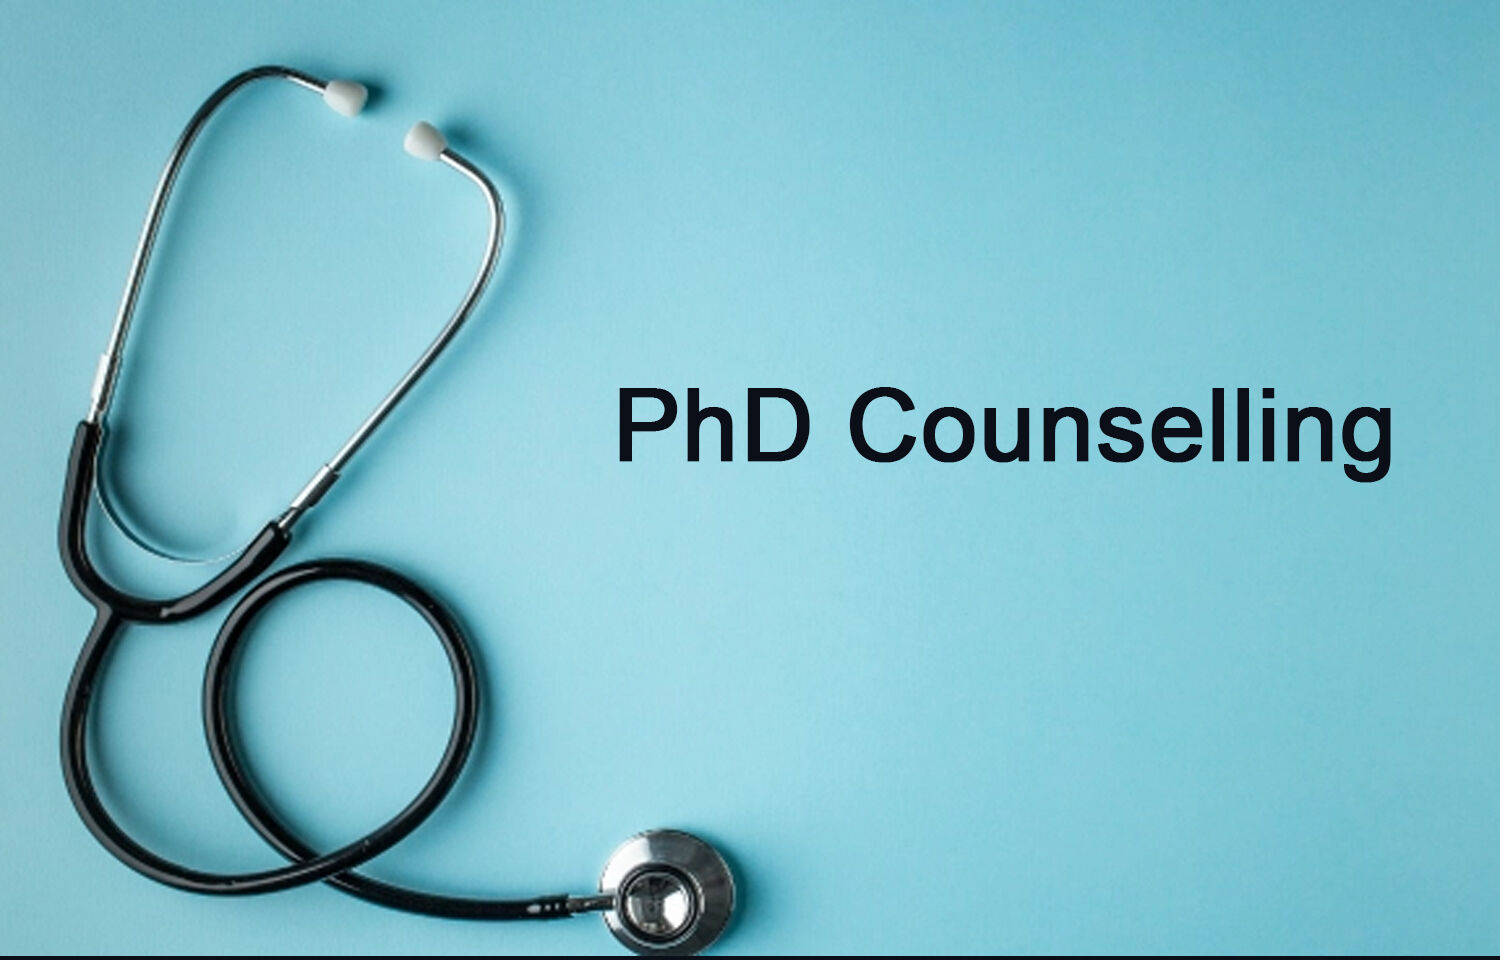 phd counselling uk